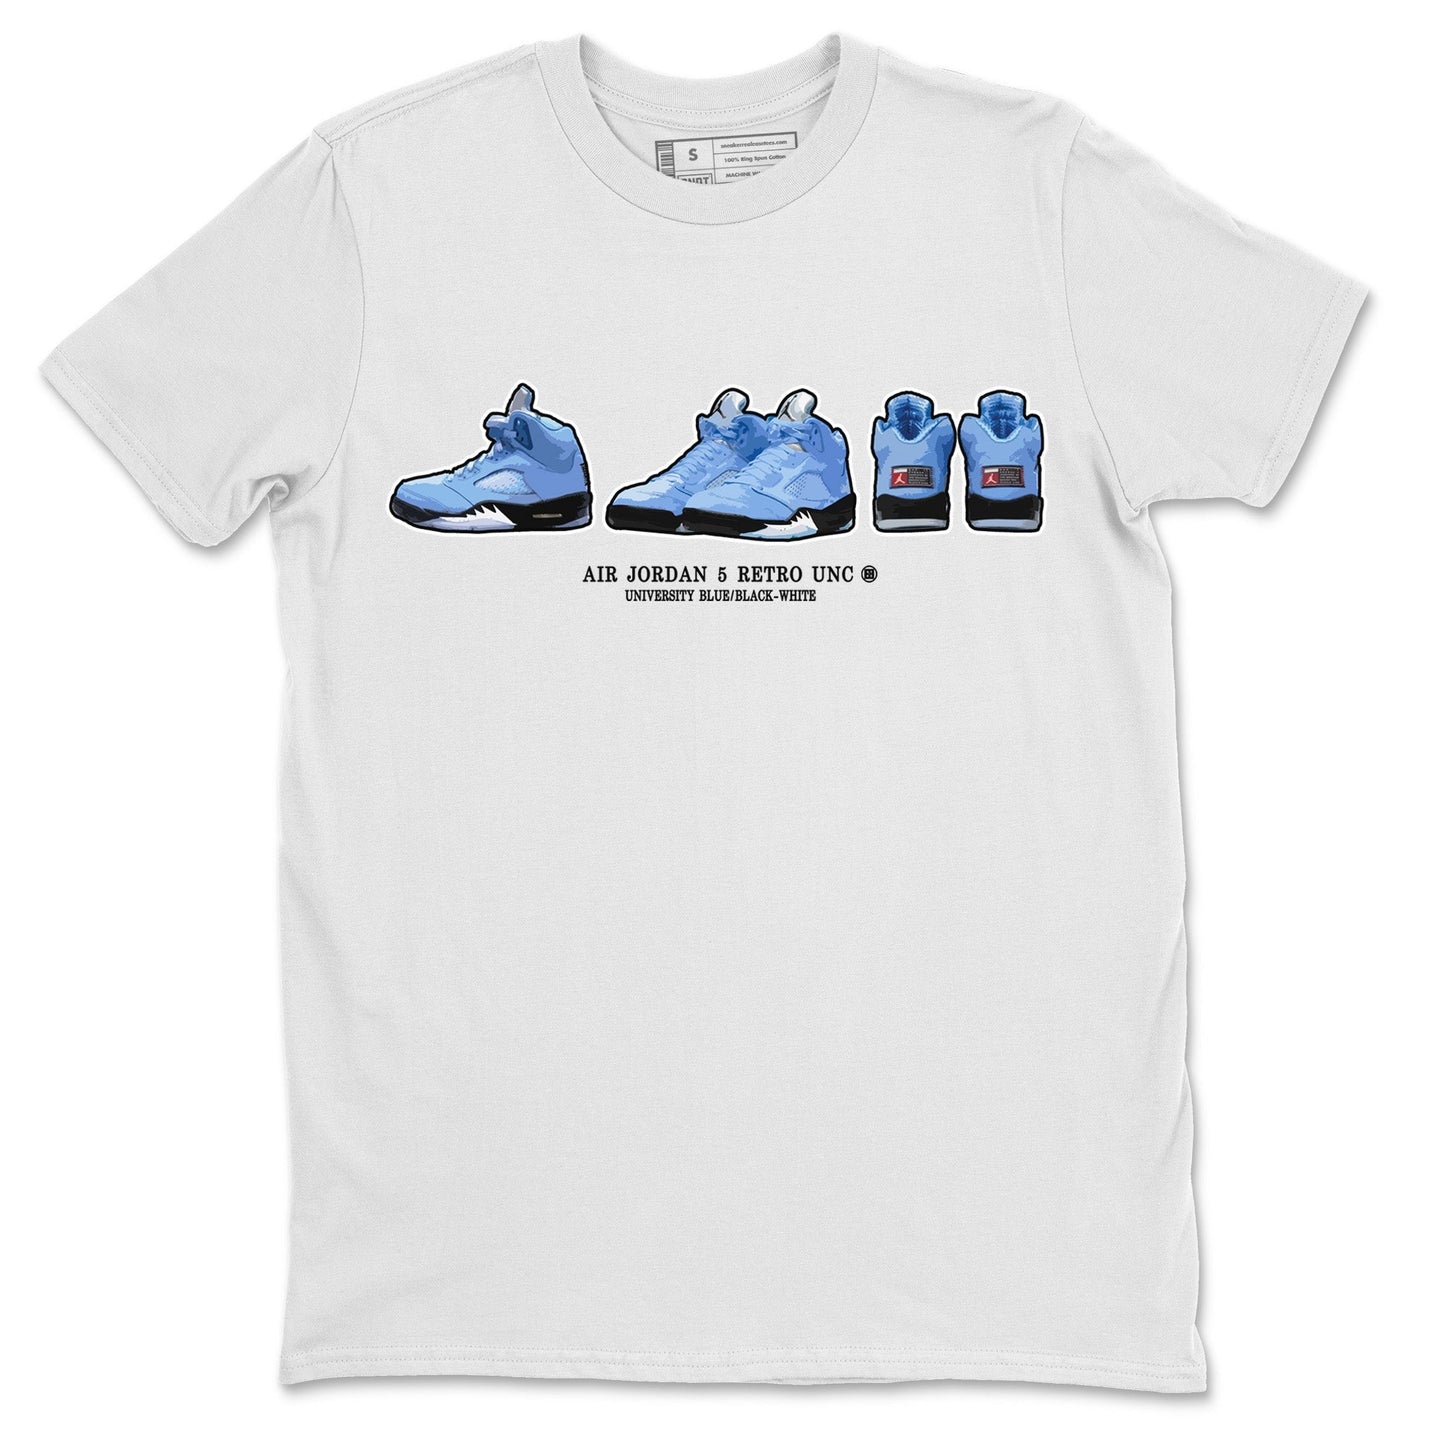 Air Jordan 5 UNC Shirt To Match Jordans Sneaker Prelude Sneaker Tees Air Jordan 5 Retro UNC Drip Gear Zone Sneaker Matching Clothing Unisex Shirts White 2